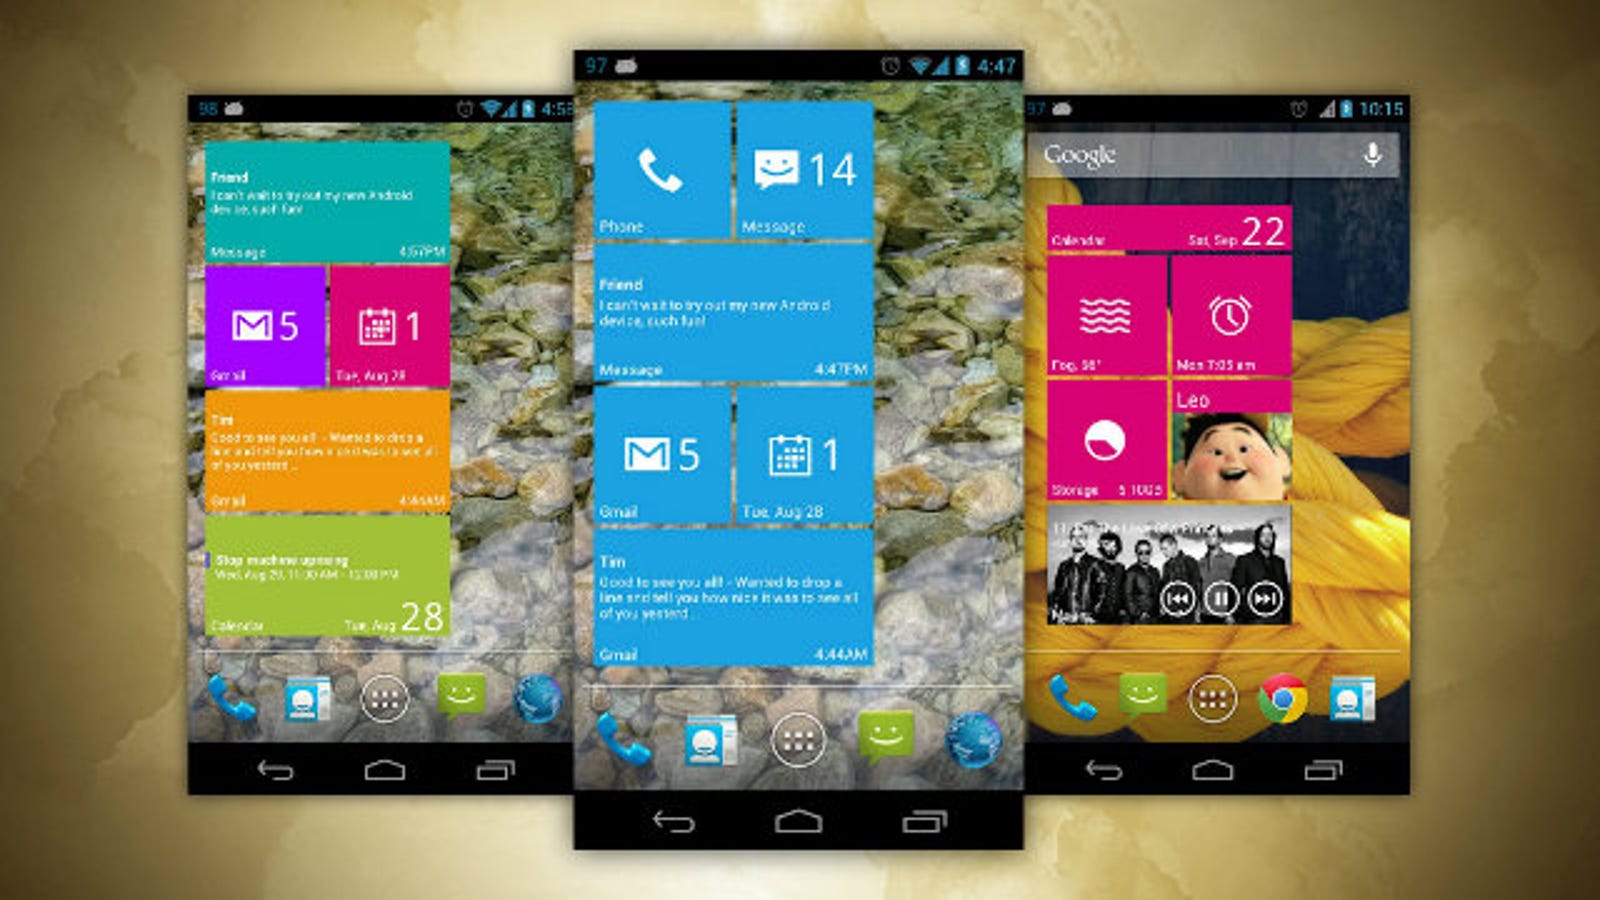 Android adb interface windows 7